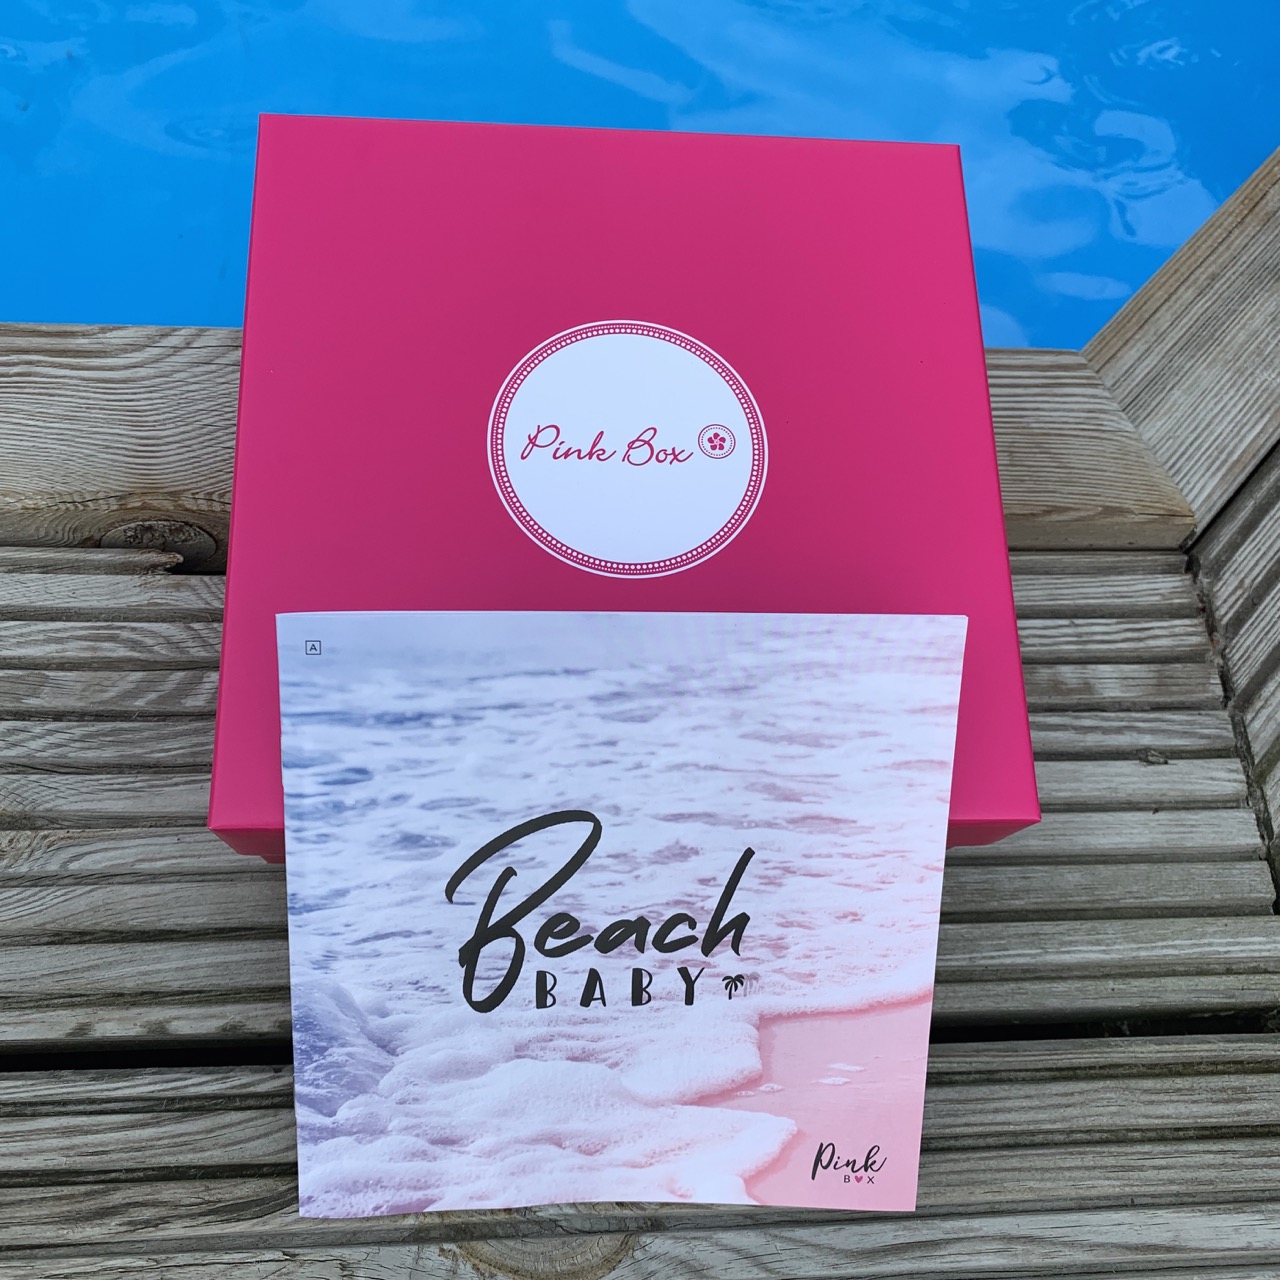 Beach Baby – die Pink Box Sommer Edition